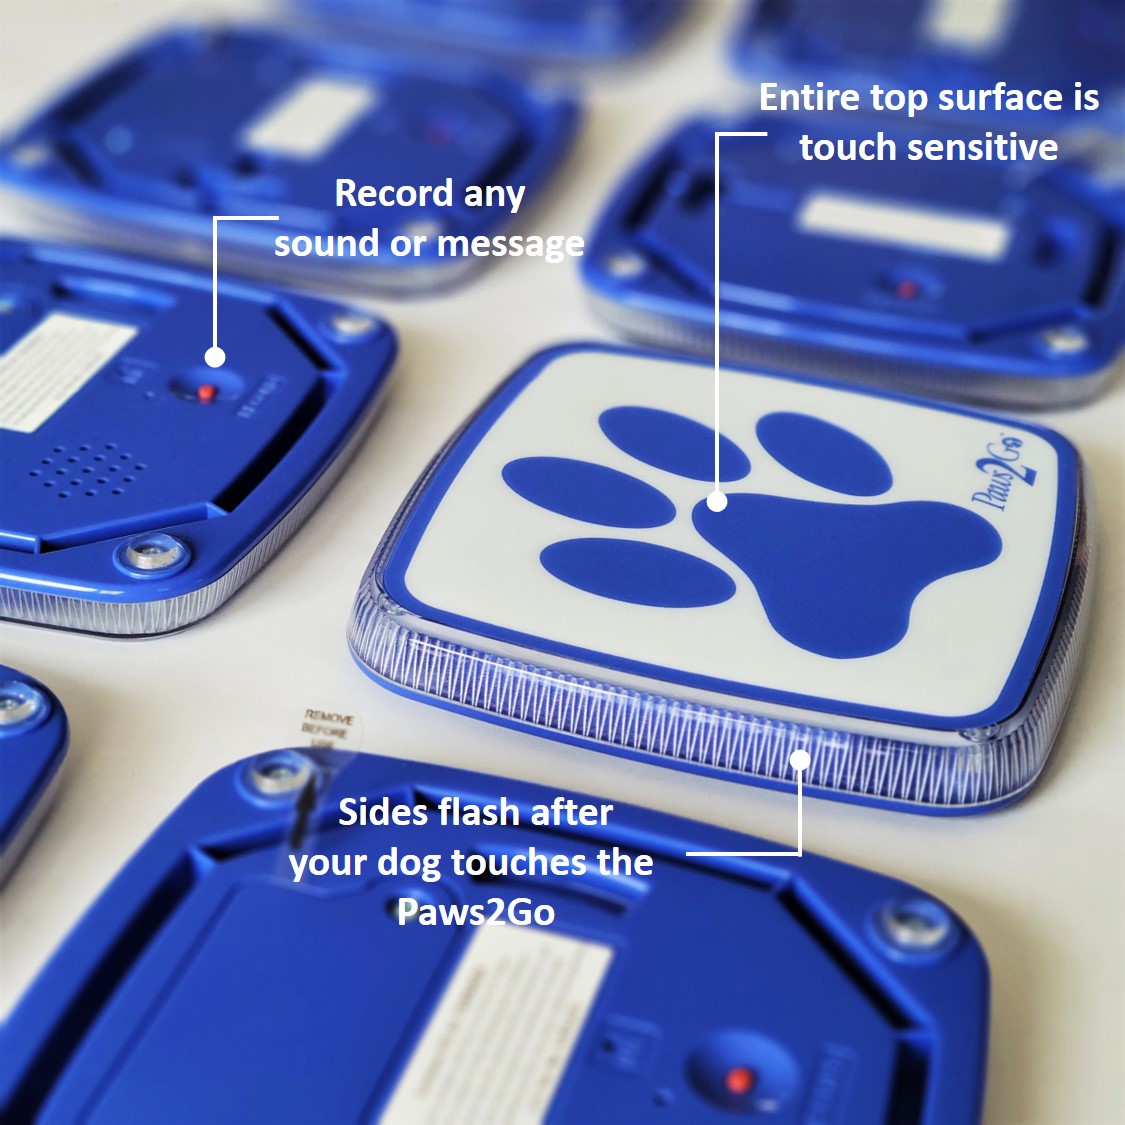 Paws2Go dog doorbell features